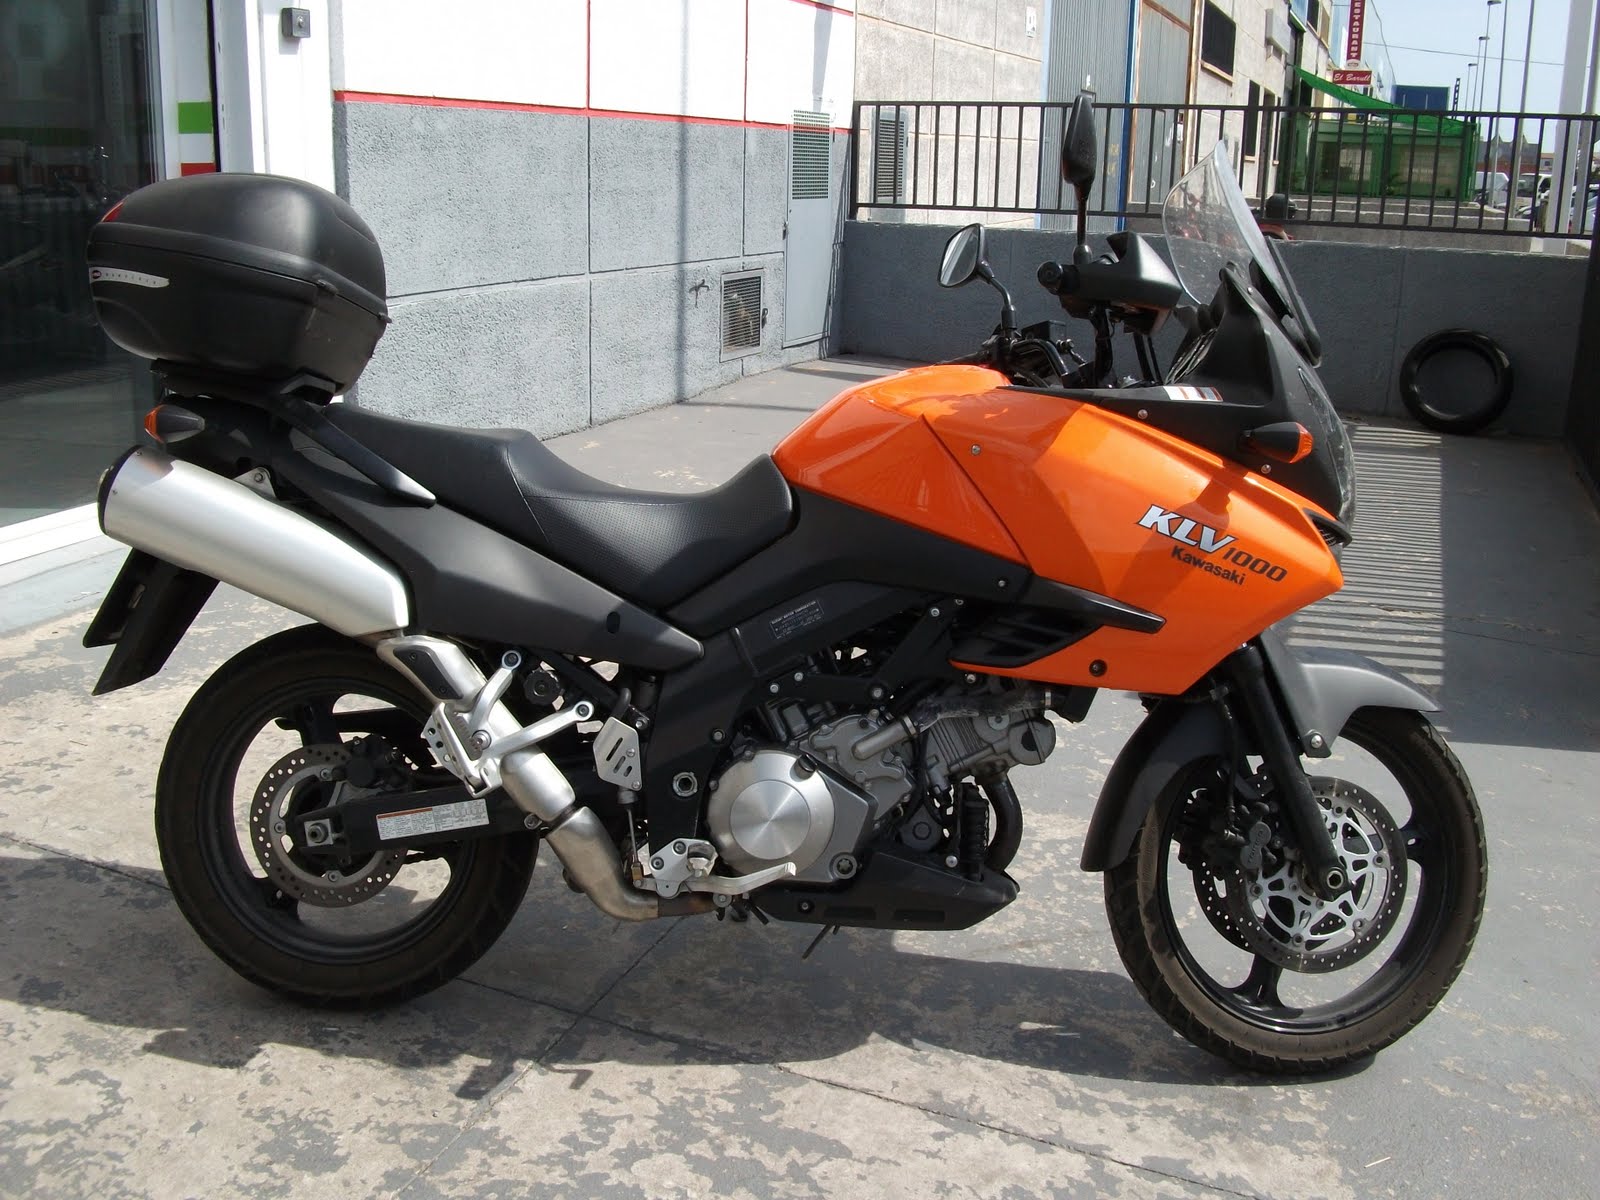 Тест-драйв мотоцикла Kawasaki Z750